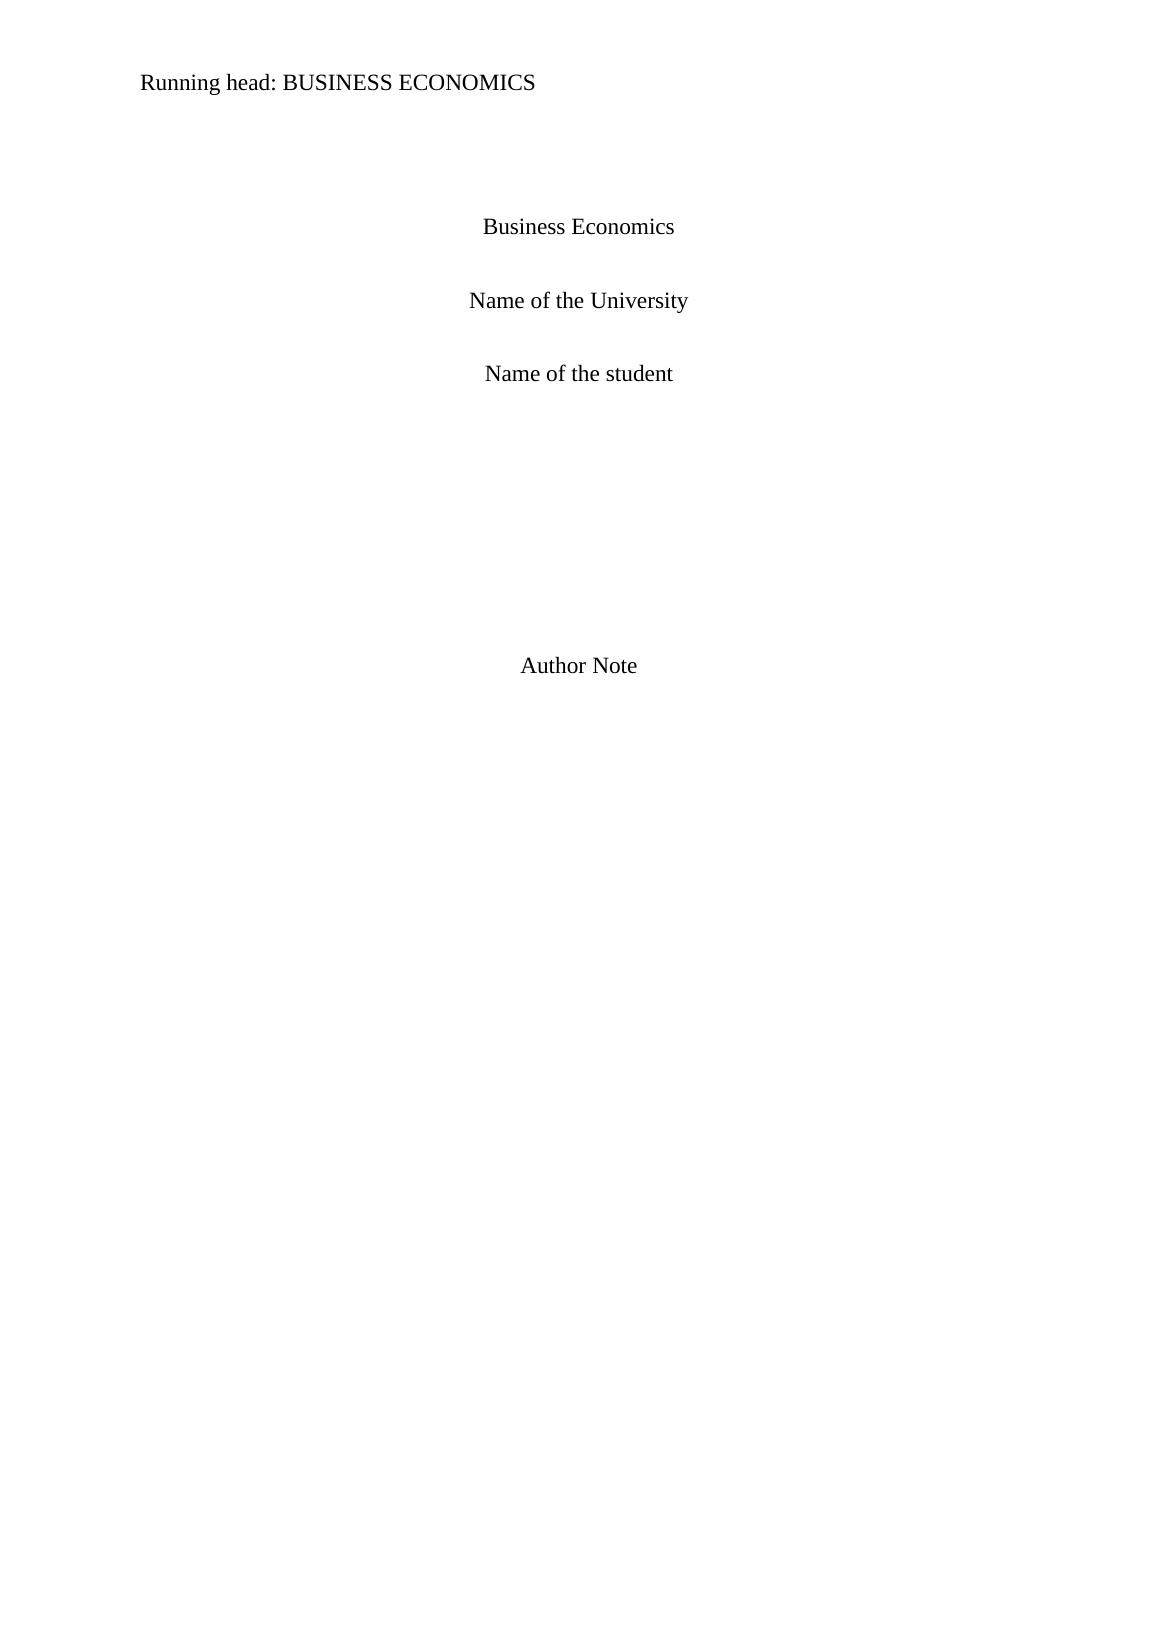 Business Economics Report (Doc)_1